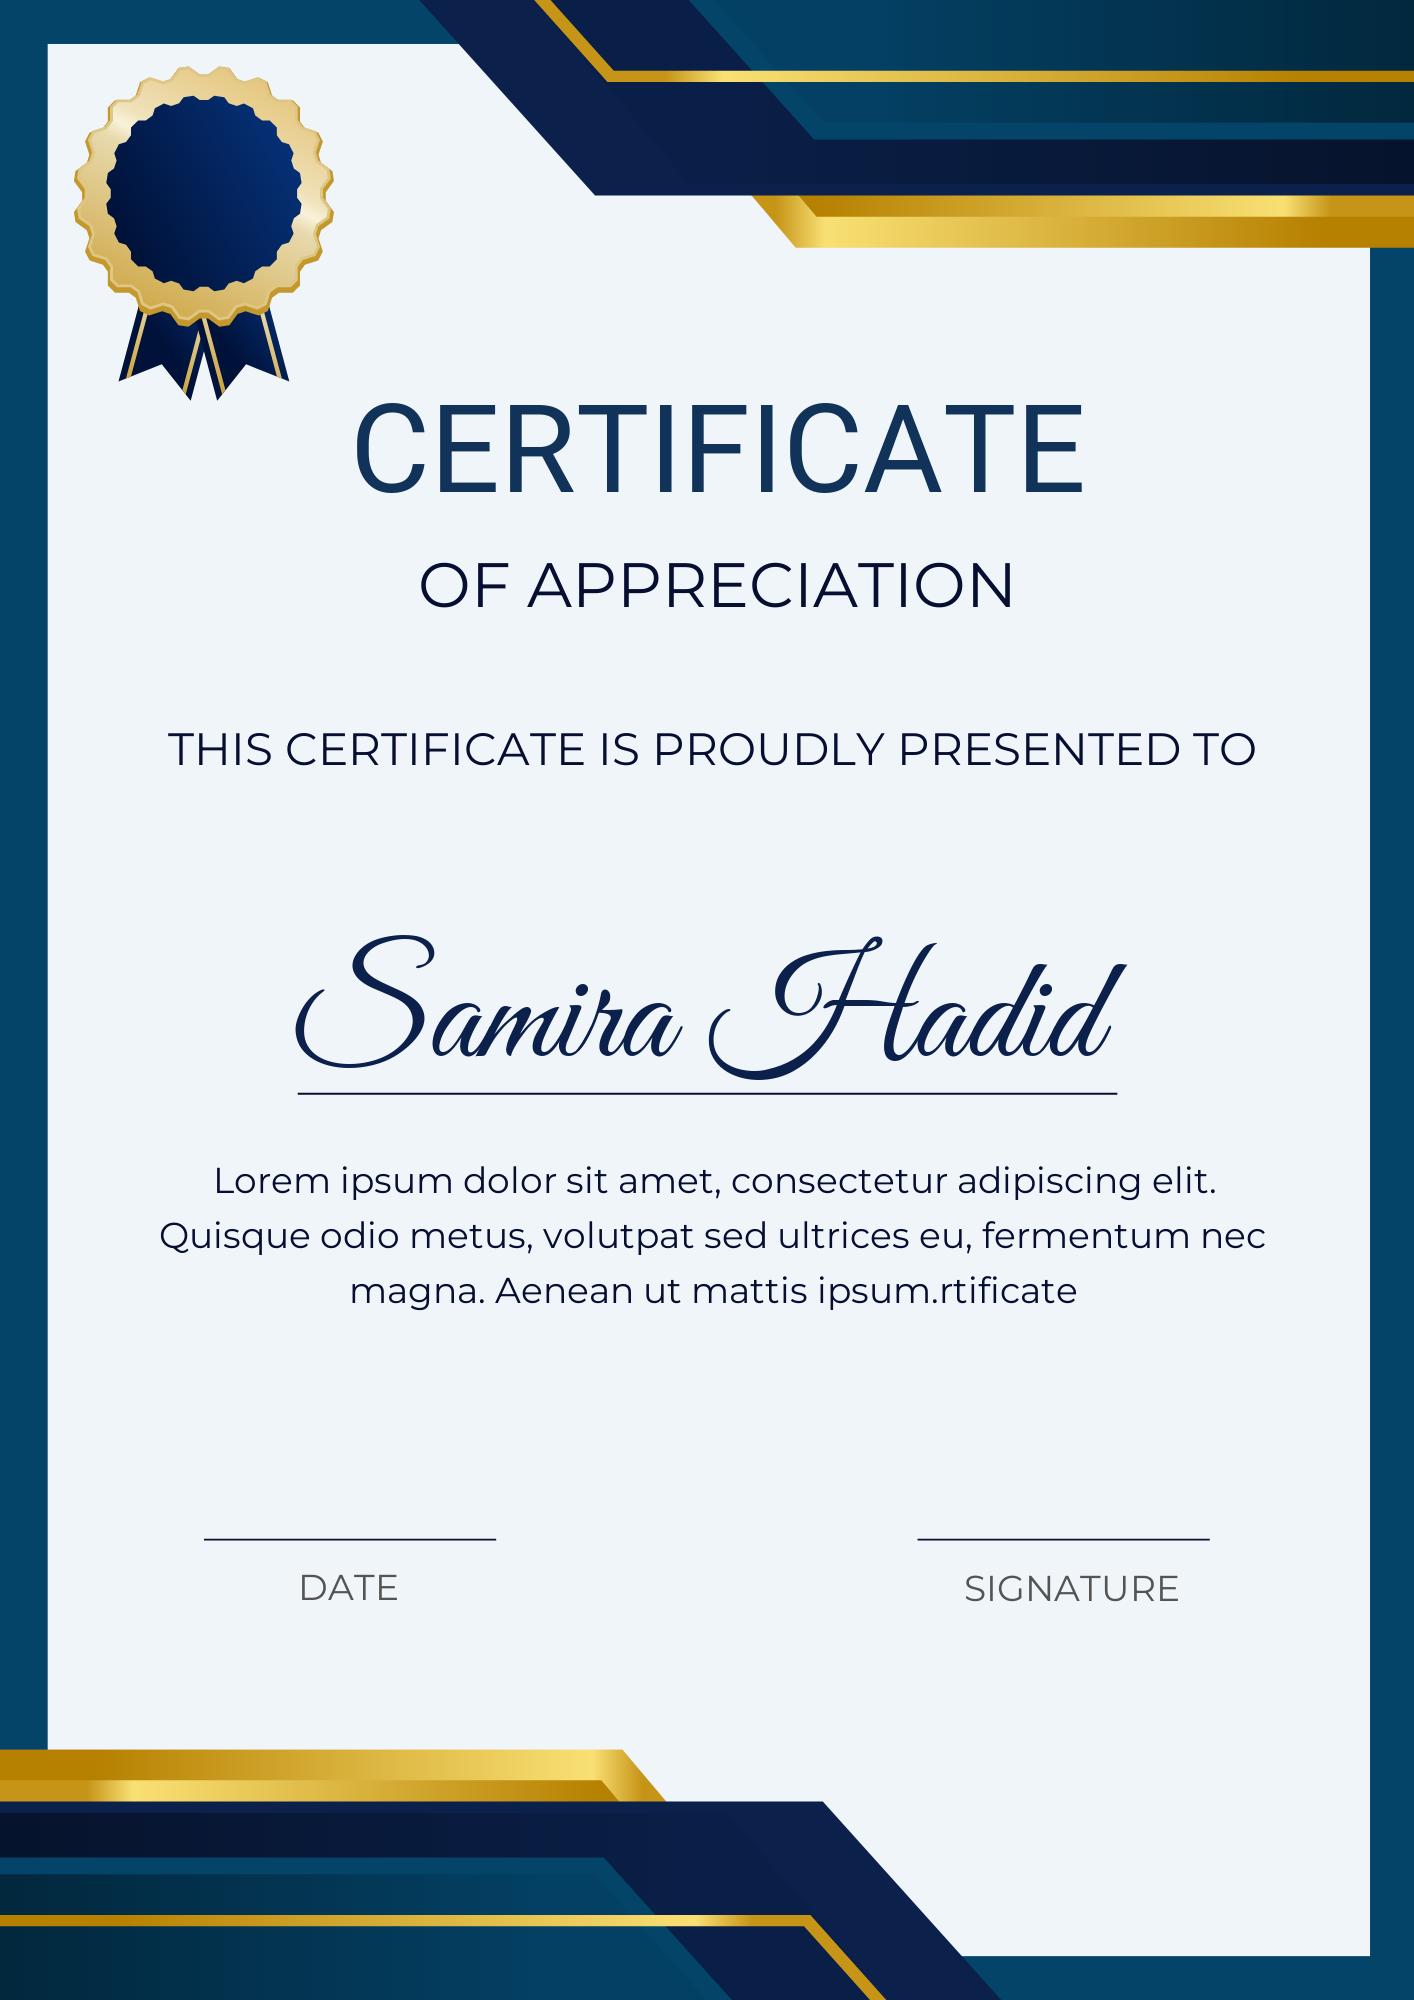 Certificate of Appreciation-961